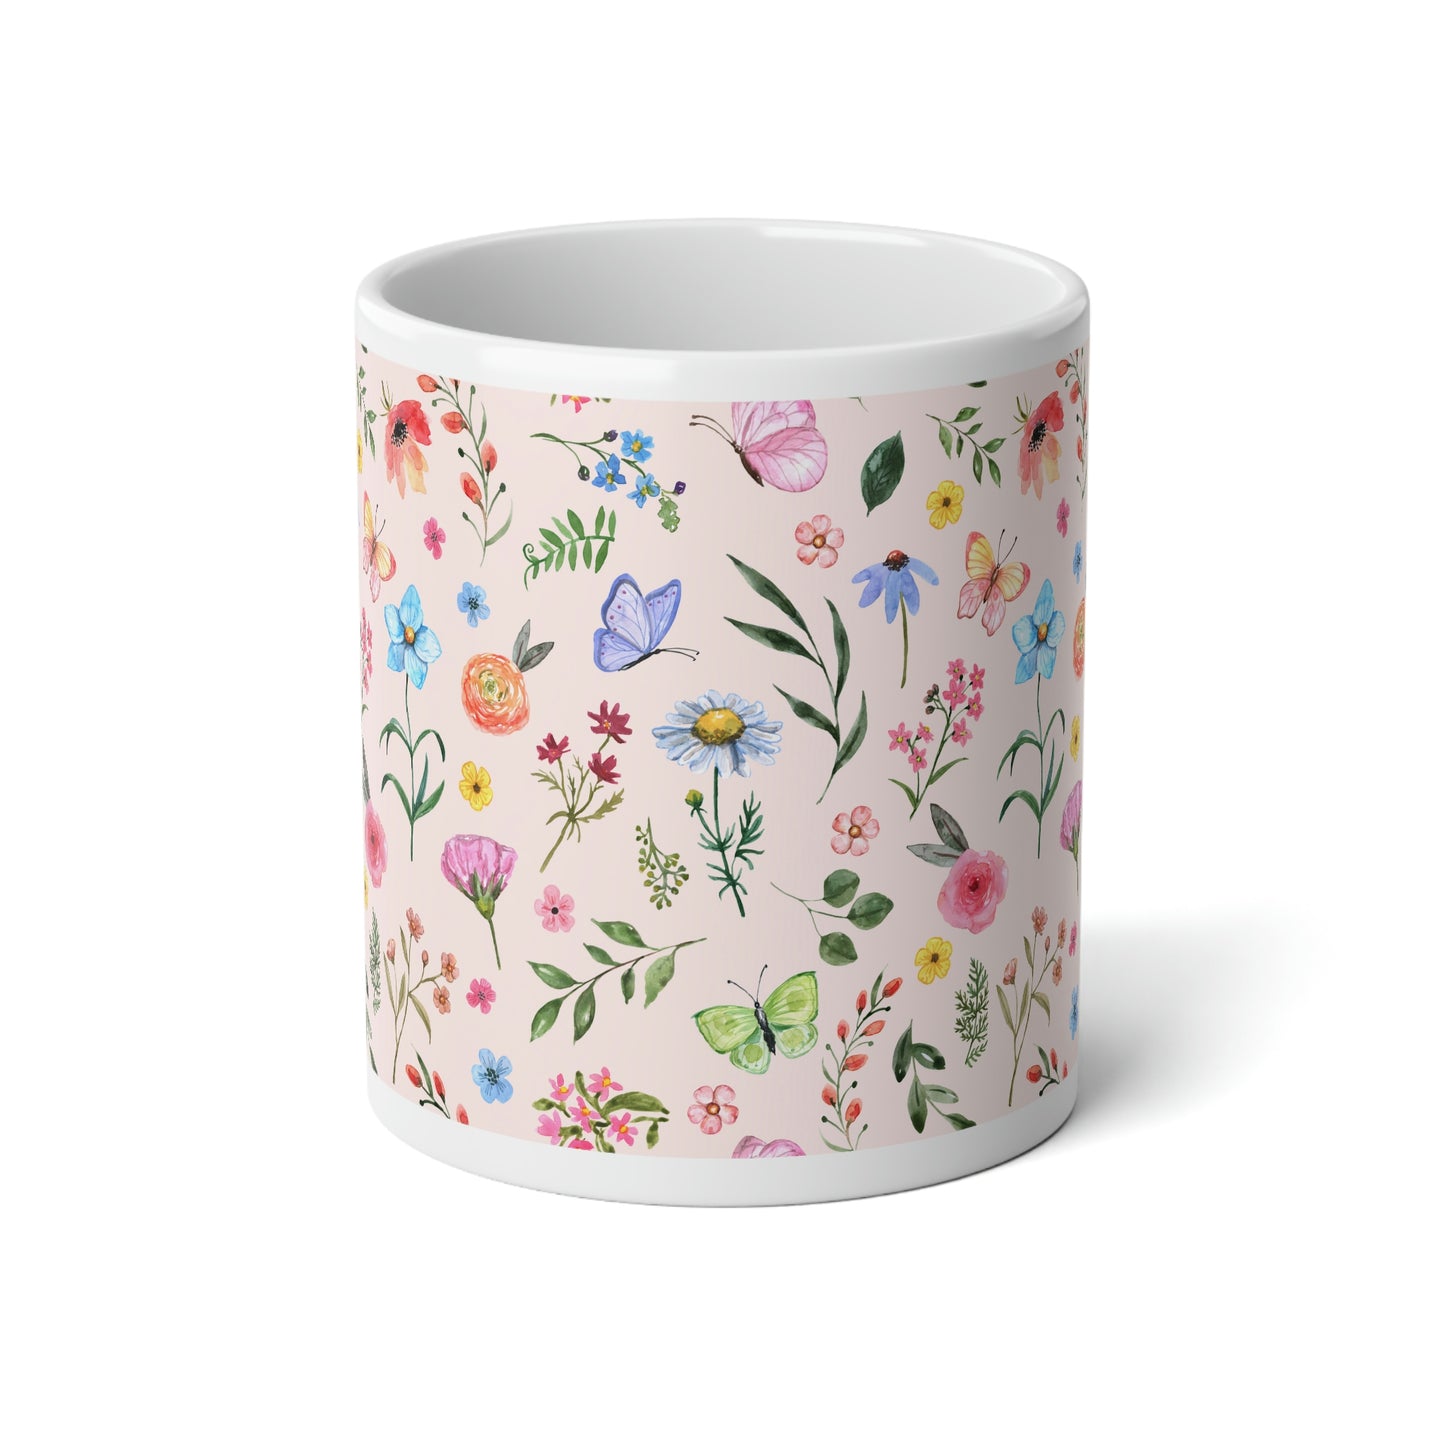 Spring Daisies and Butterflies Jumbo Mug, 20oz